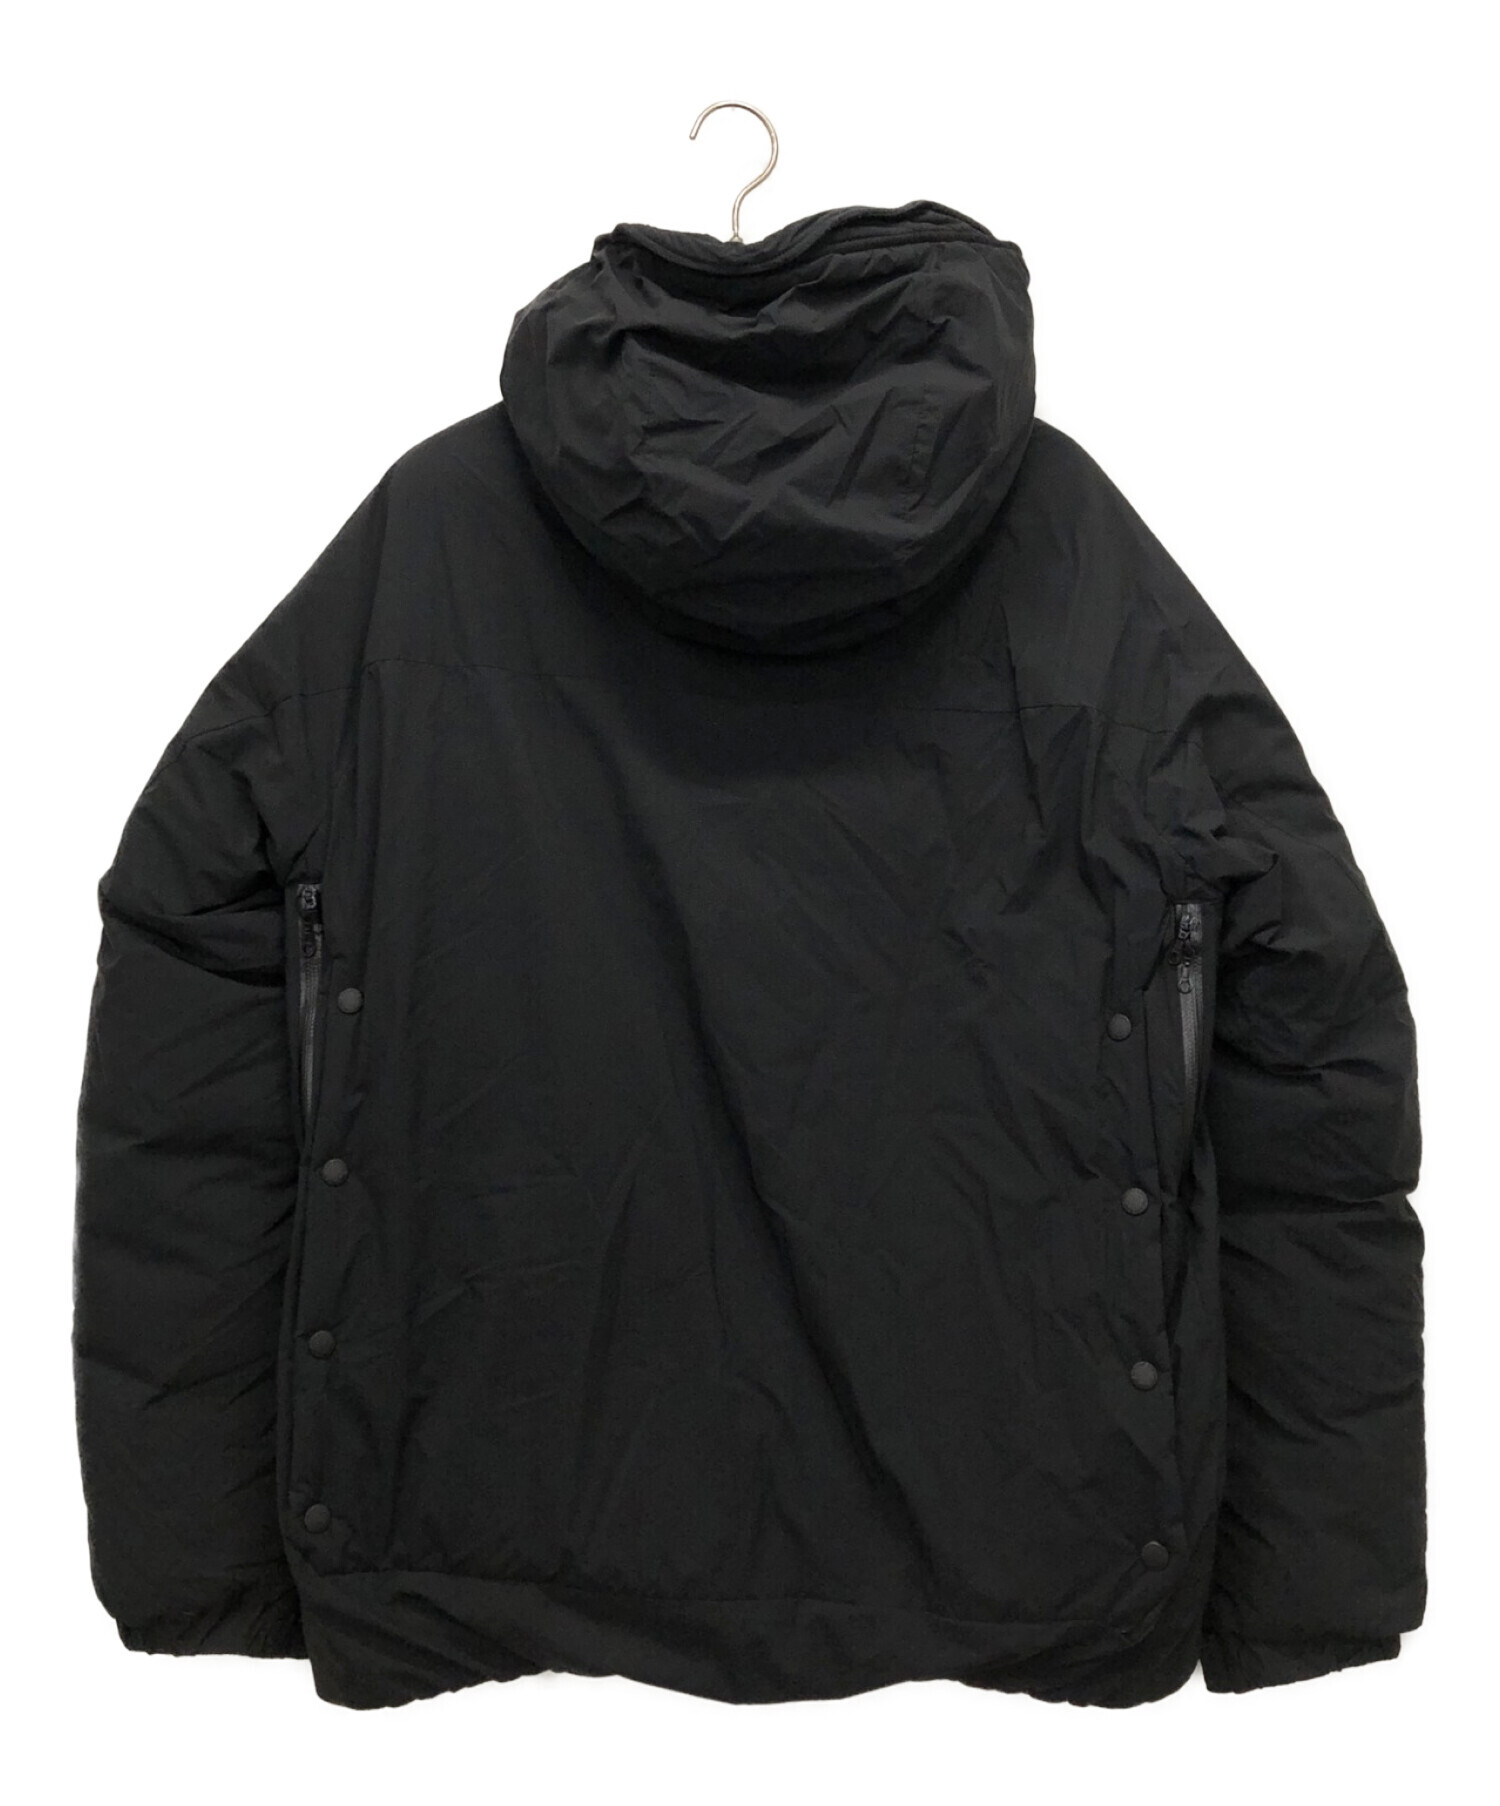 F/CE. (エフシーイー) NANGA (ナンガ) ダウンジャケット ブラック サイズ:Ⅼ